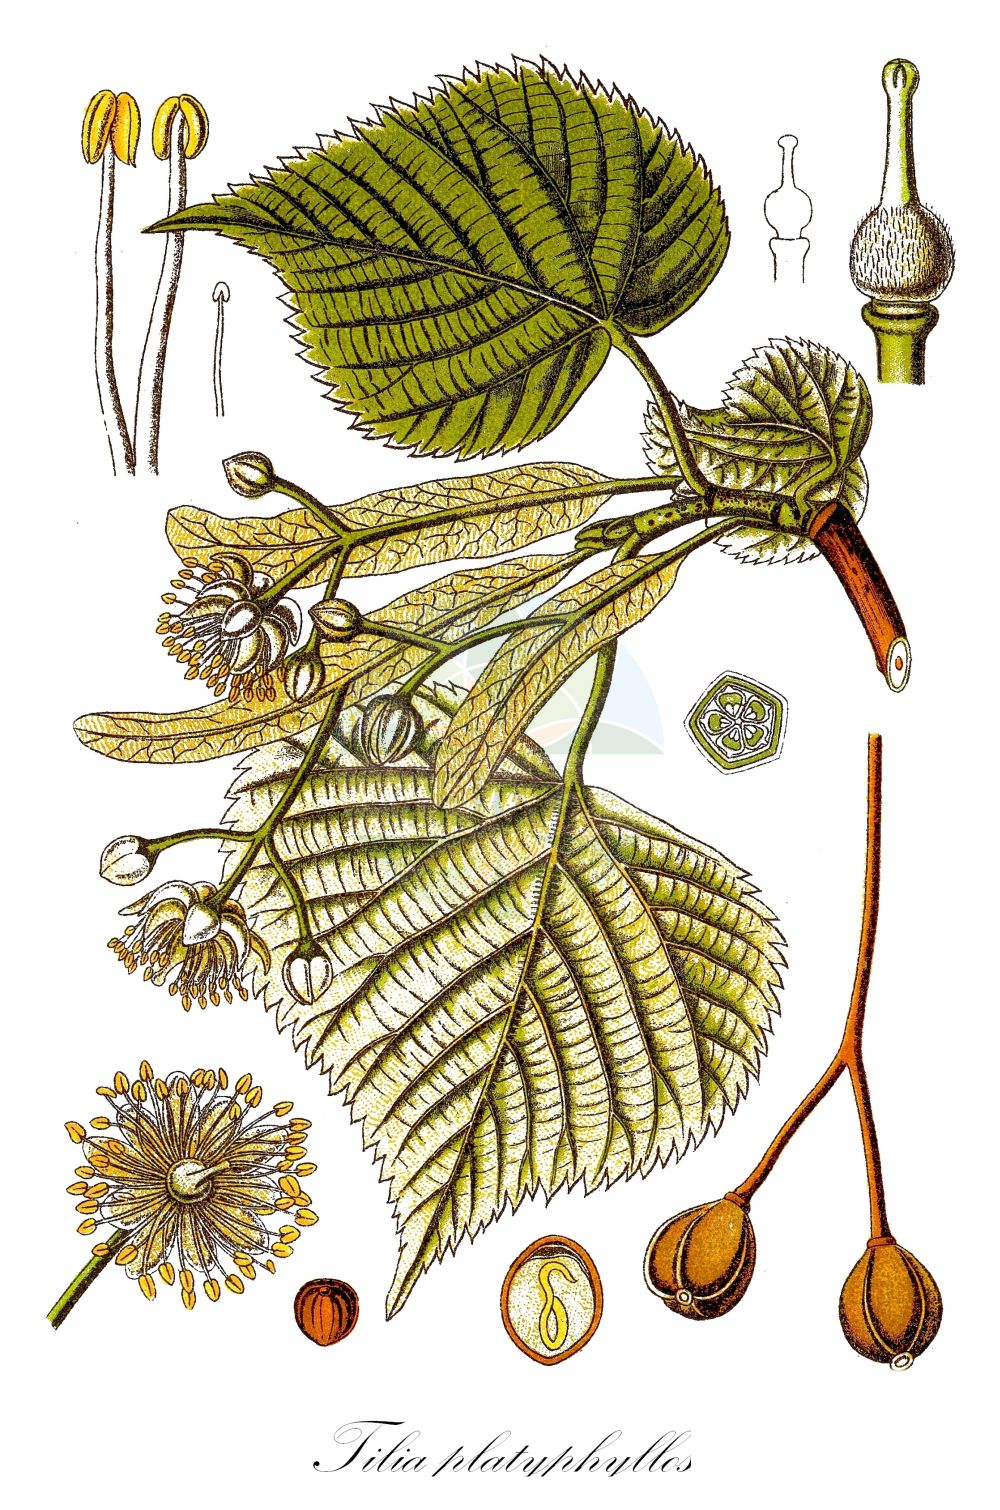 Historische Abbildung von Tilia platyphyllos (Sommer-Linde - Large-leaved Lime). Das Bild zeigt Blatt, Bluete, Frucht und Same. ---- Historical Drawing of Tilia platyphyllos (Sommer-Linde - Large-leaved Lime). The image is showing leaf, flower, fruit and seed.(Tilia platyphyllos,Sommer-Linde,Large-leaved Lime,Tilia braunii,Tilia cordifolia,Tilia corylifolia,Tilia flava,Tilia grandifolia,Tilia platyphyllos,Tilia praecox,Tilia pyramidalis,Tilia rubra,Tilia sitnensis,Sommer-Linde,Frueh-Linde,Gewoehnliche Sommer-Linde,Large-leaved Lime,Broad-leaved Lime,Largeleaf Linden,Large-leaved Linden,Tilia,Linde,Lime,Malvaceae,Malvengewächse,Mallow family,Blatt,Bluete,Frucht,Same,leaf,flower,fruit,seed,Sturm (1796f))